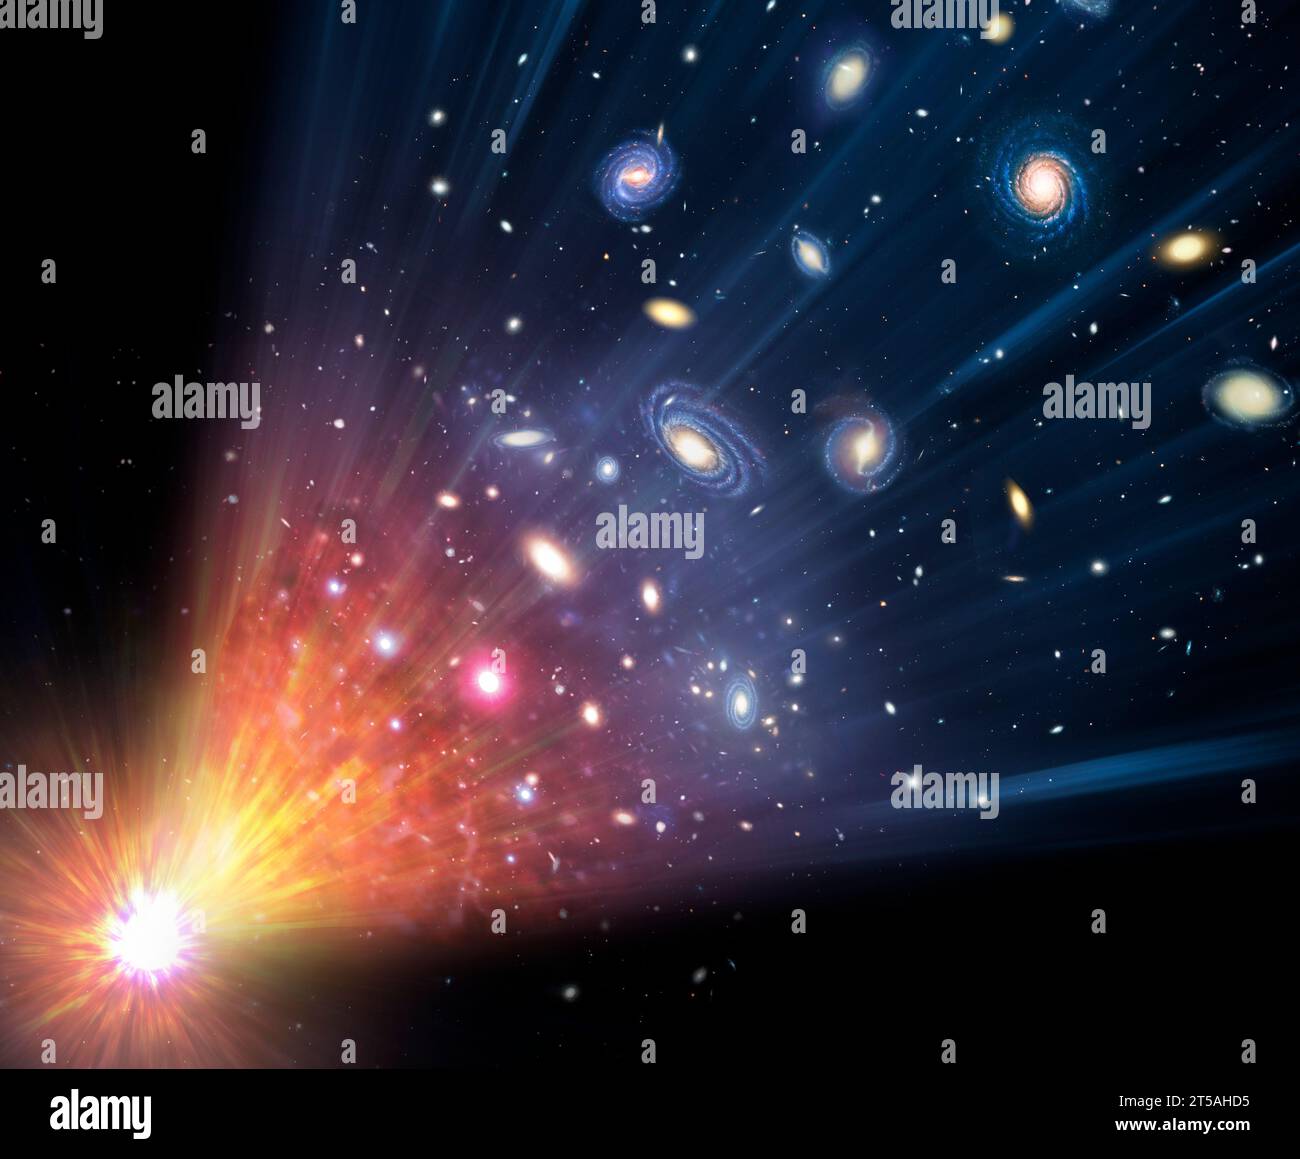 Big Bang and expanding universe, illustration Stock Photo